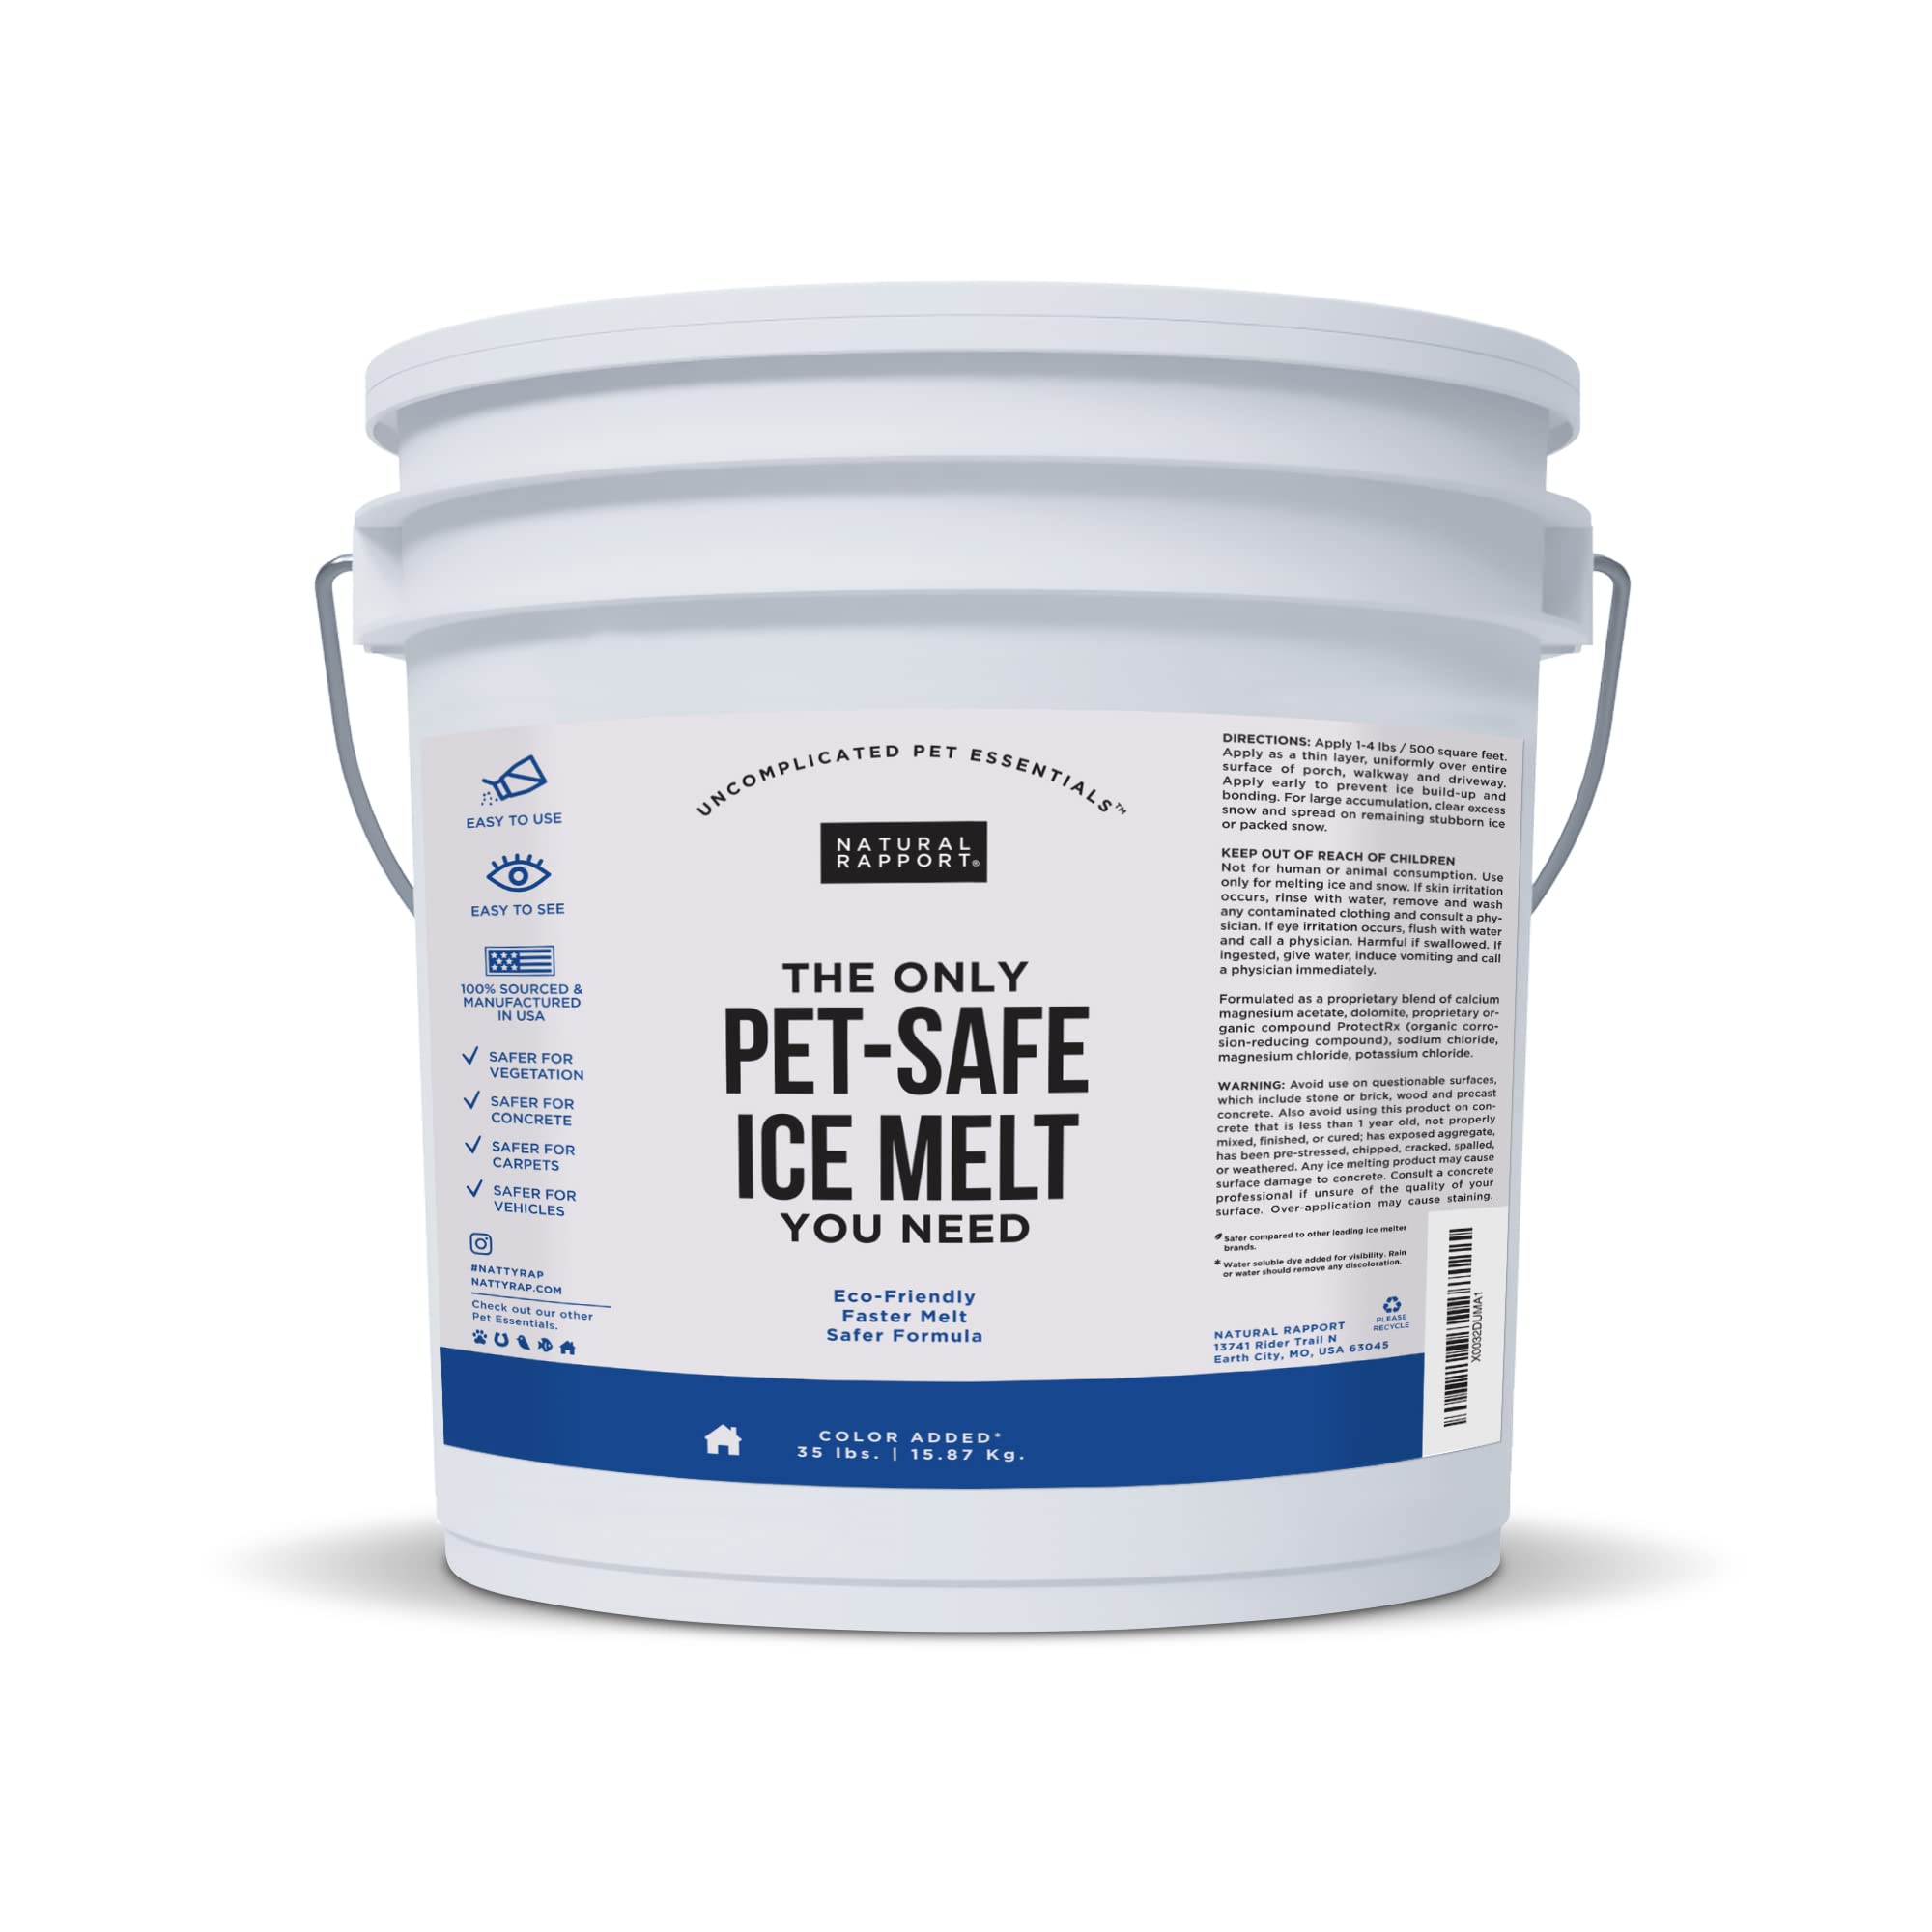 Natural Rapport Pet Friendly Ice Melt - Calcium Chloride Free, Pet Safe Ice Melter, Rock Salt Alternative - Time Release Deicer 